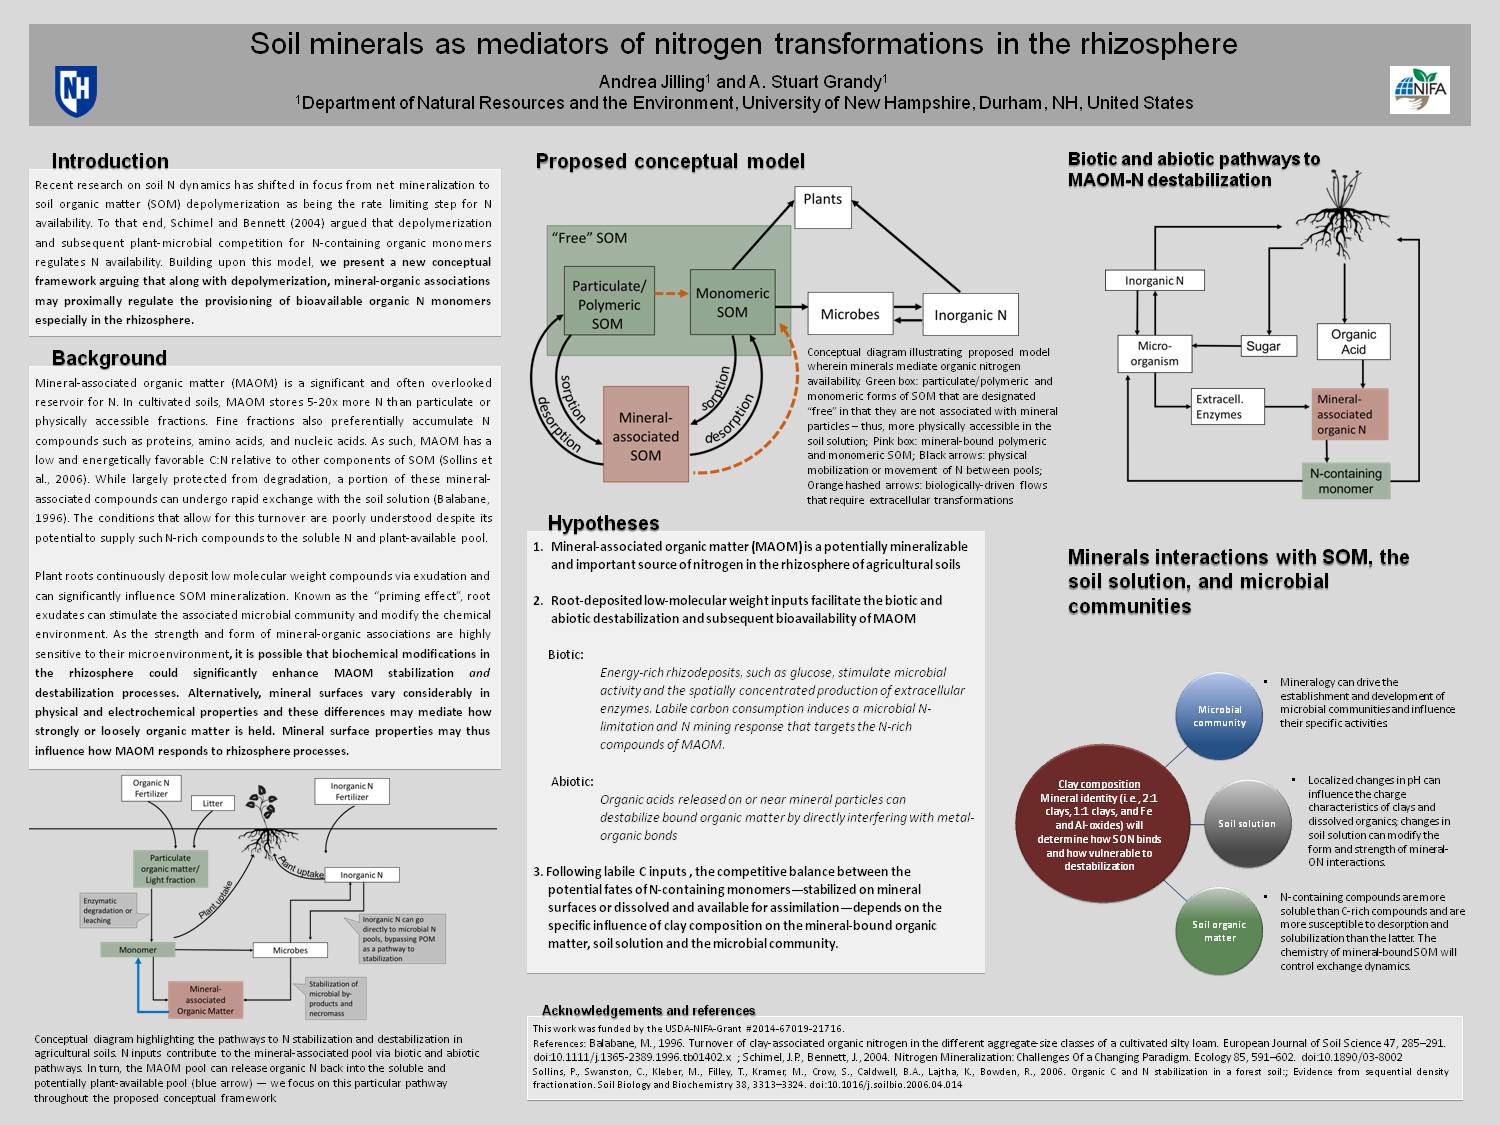 Soil Minerals As Mediators Of Nitrogen Transformations In The Rhizosphere by andreajilling